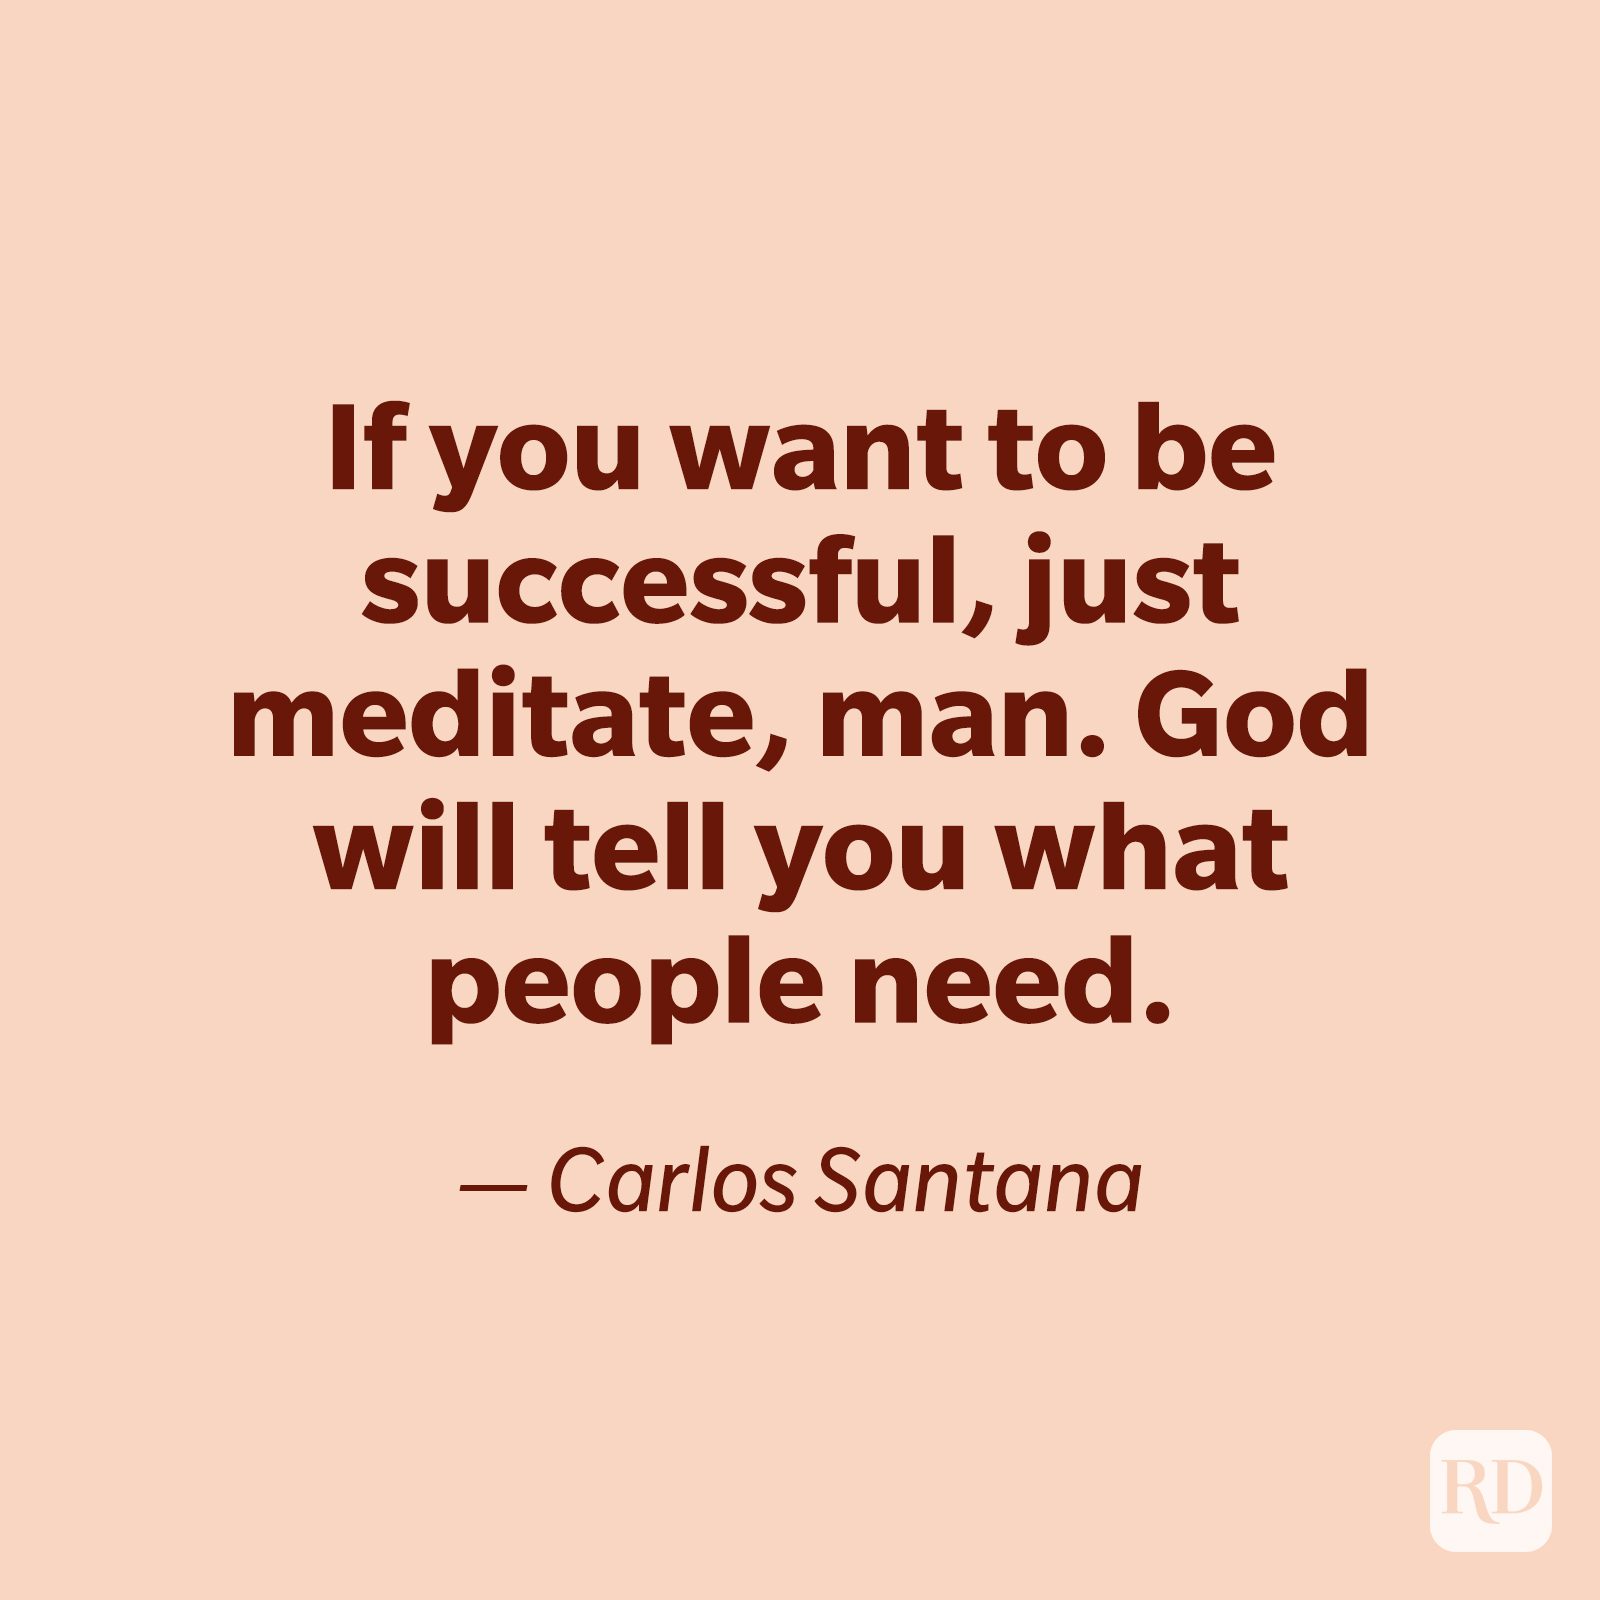 Carlos Santana quote